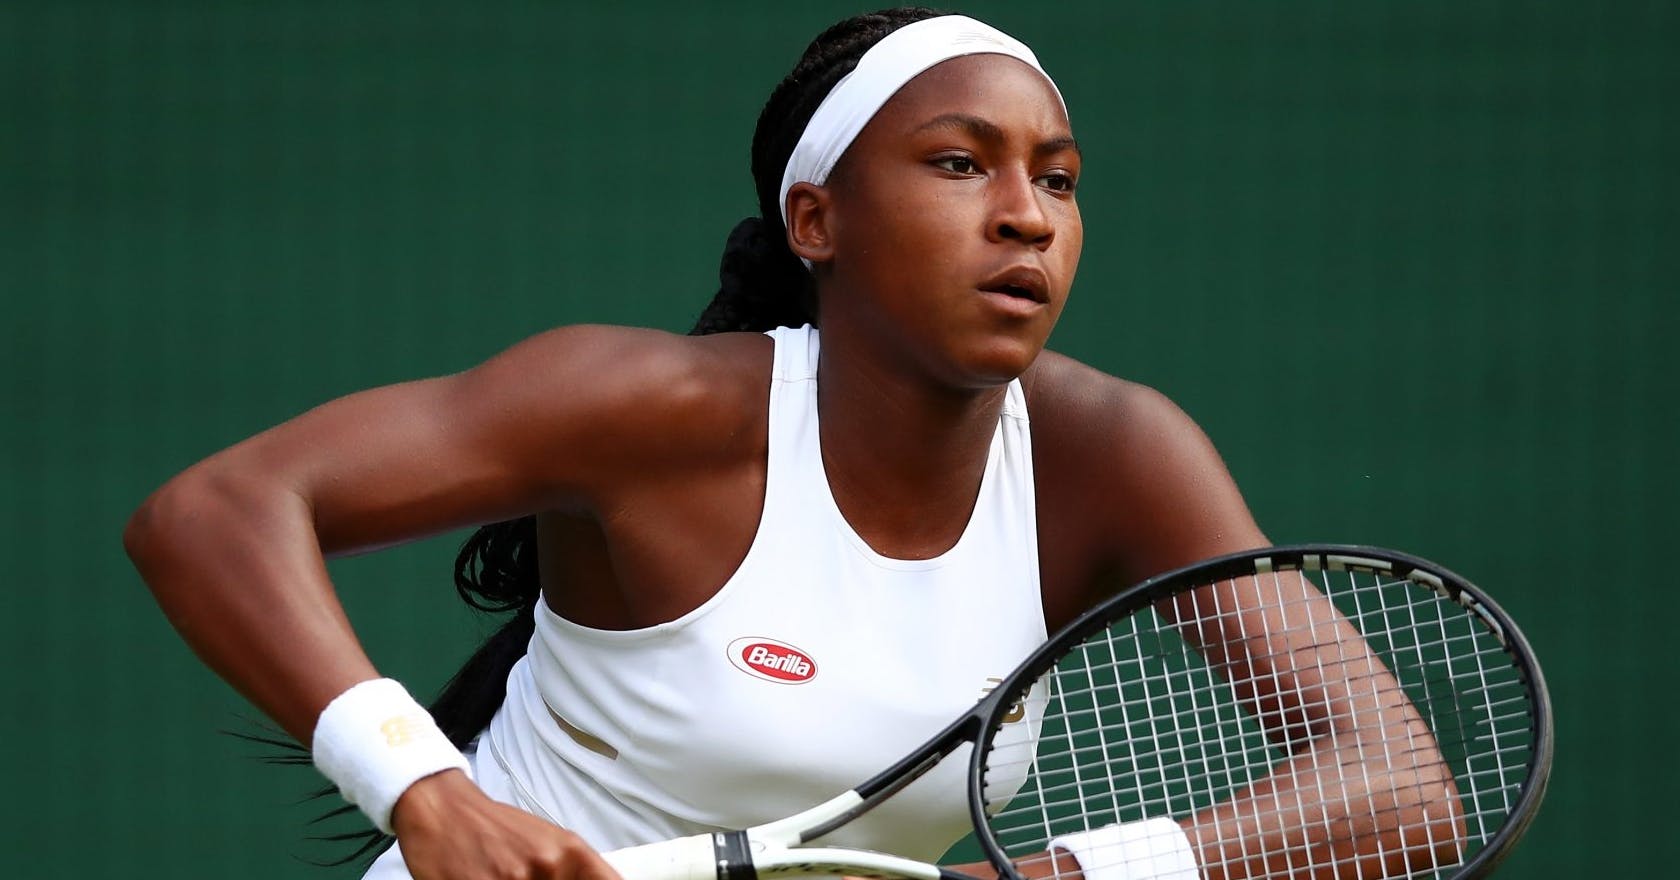 Cori Gauff beat Venus Willams at Wimbledon 2019